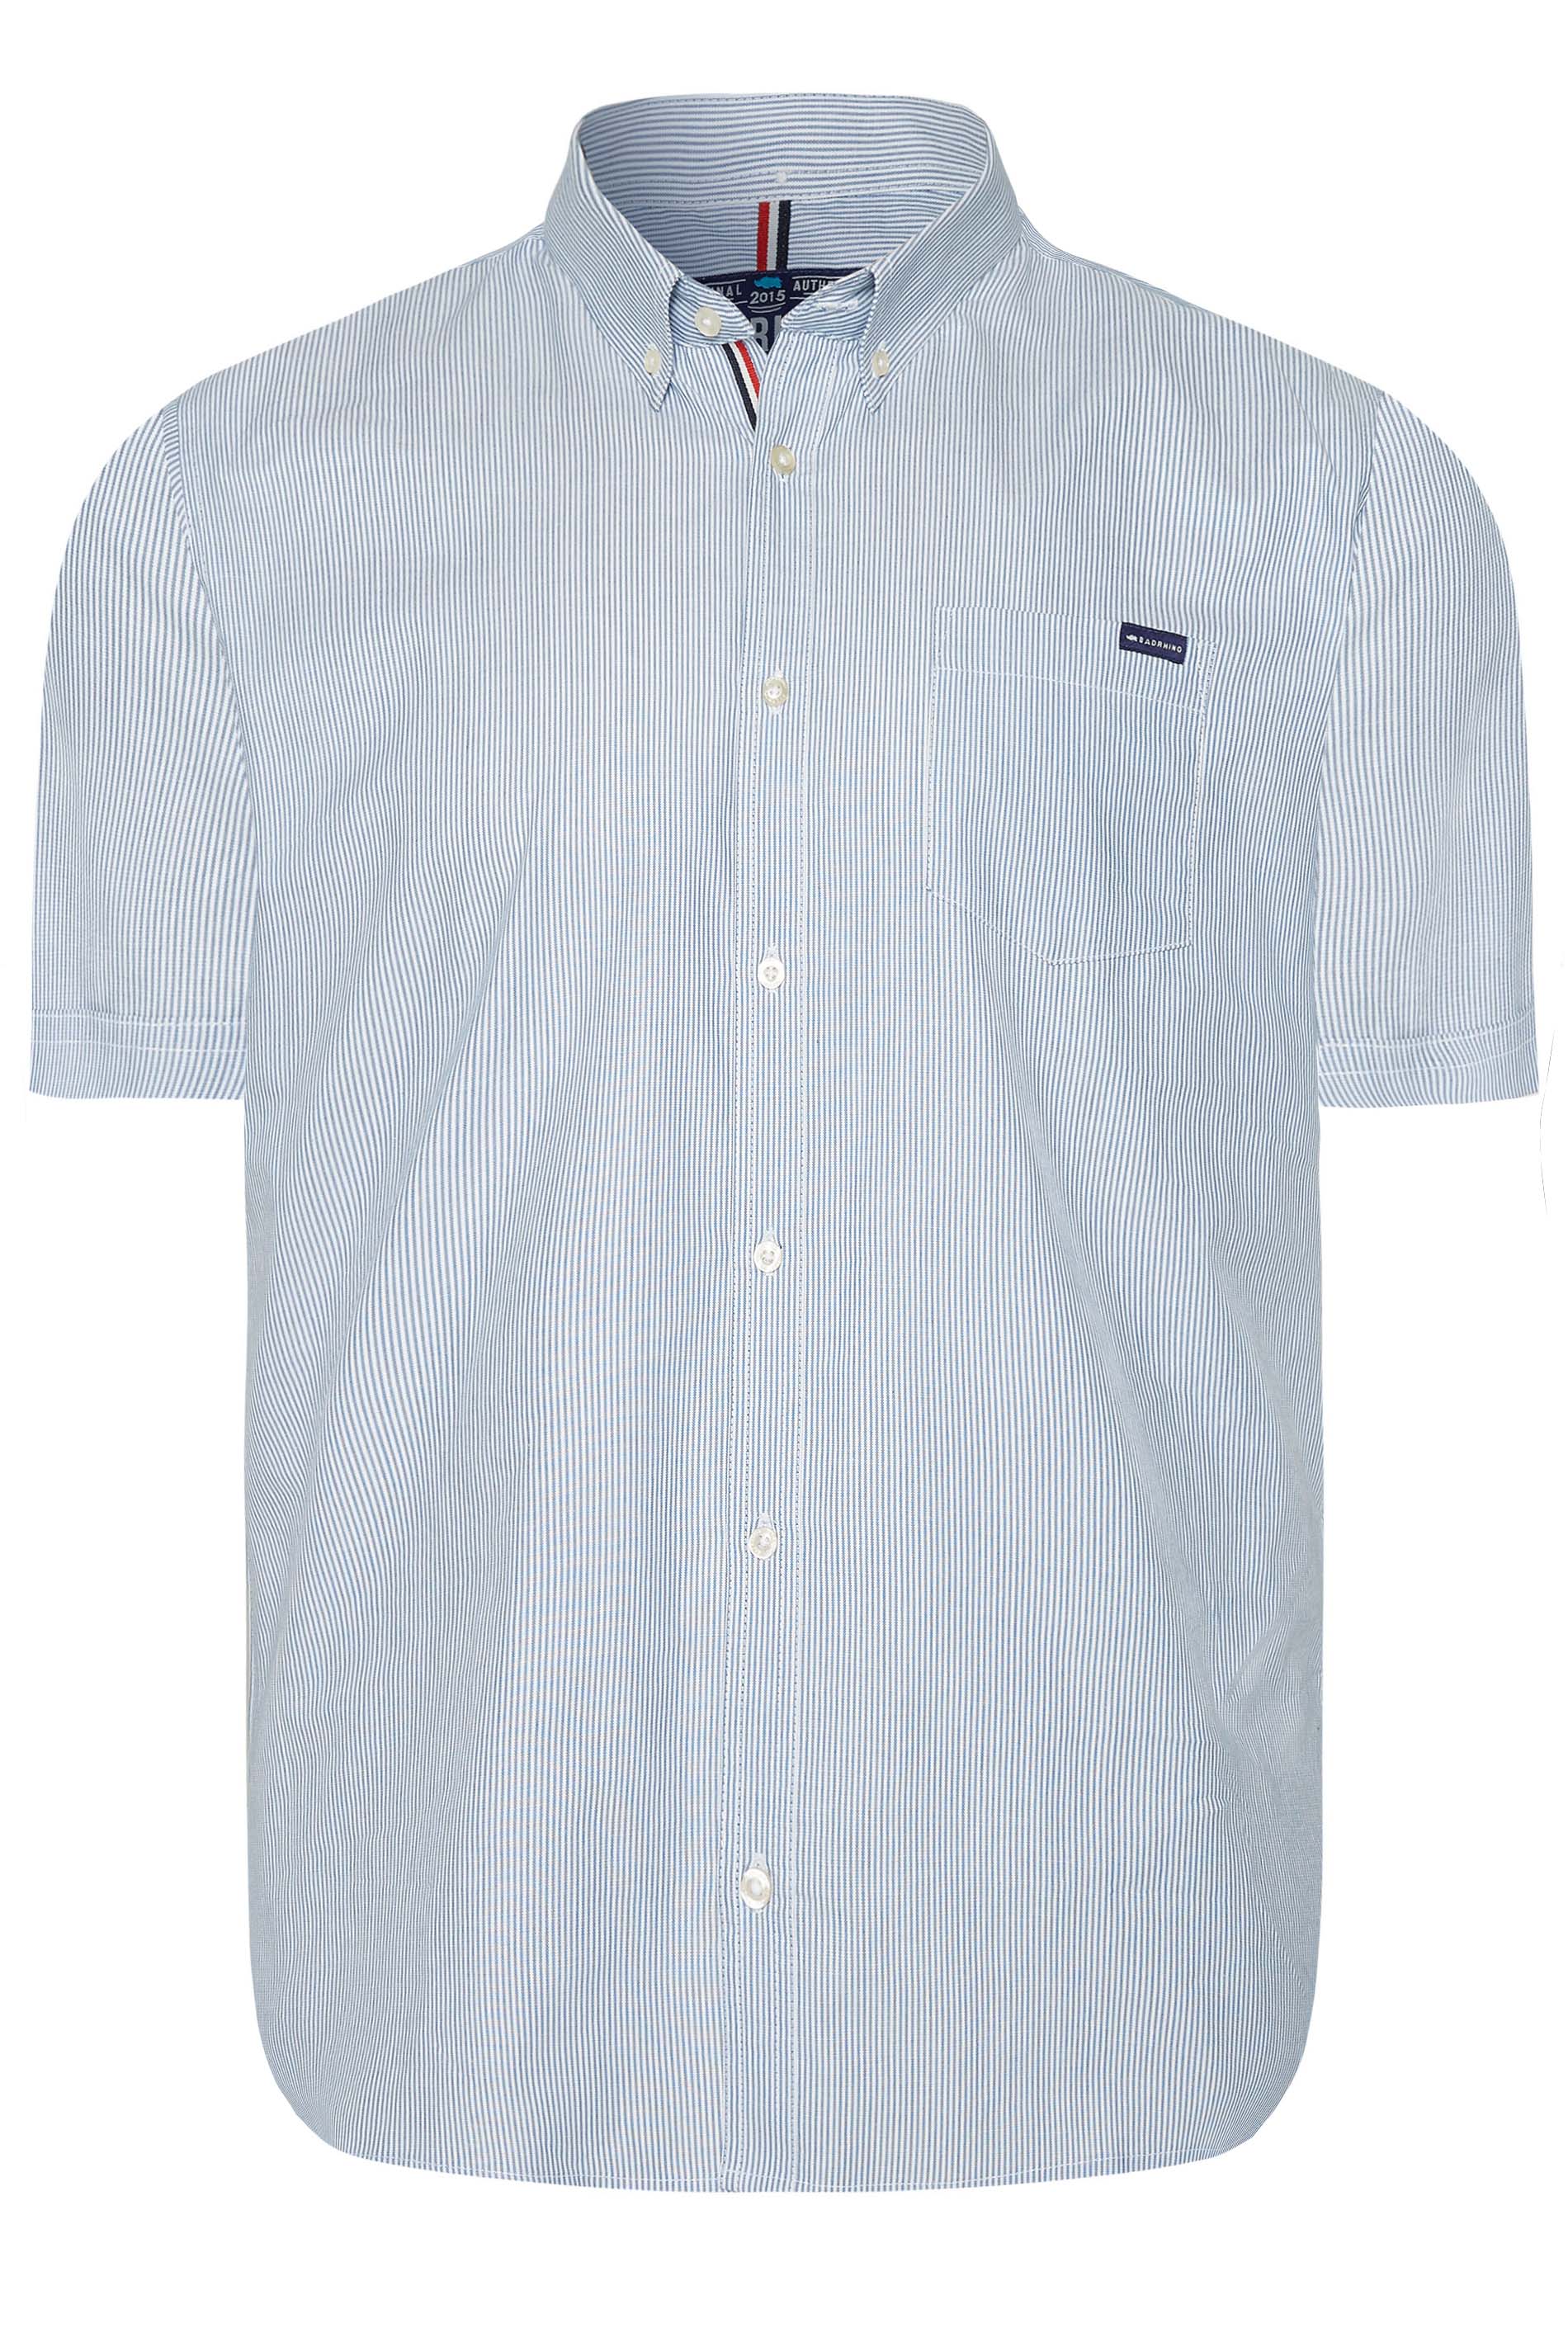 BadRhino Big & Tall Blue Striped Oxford Shirt 1